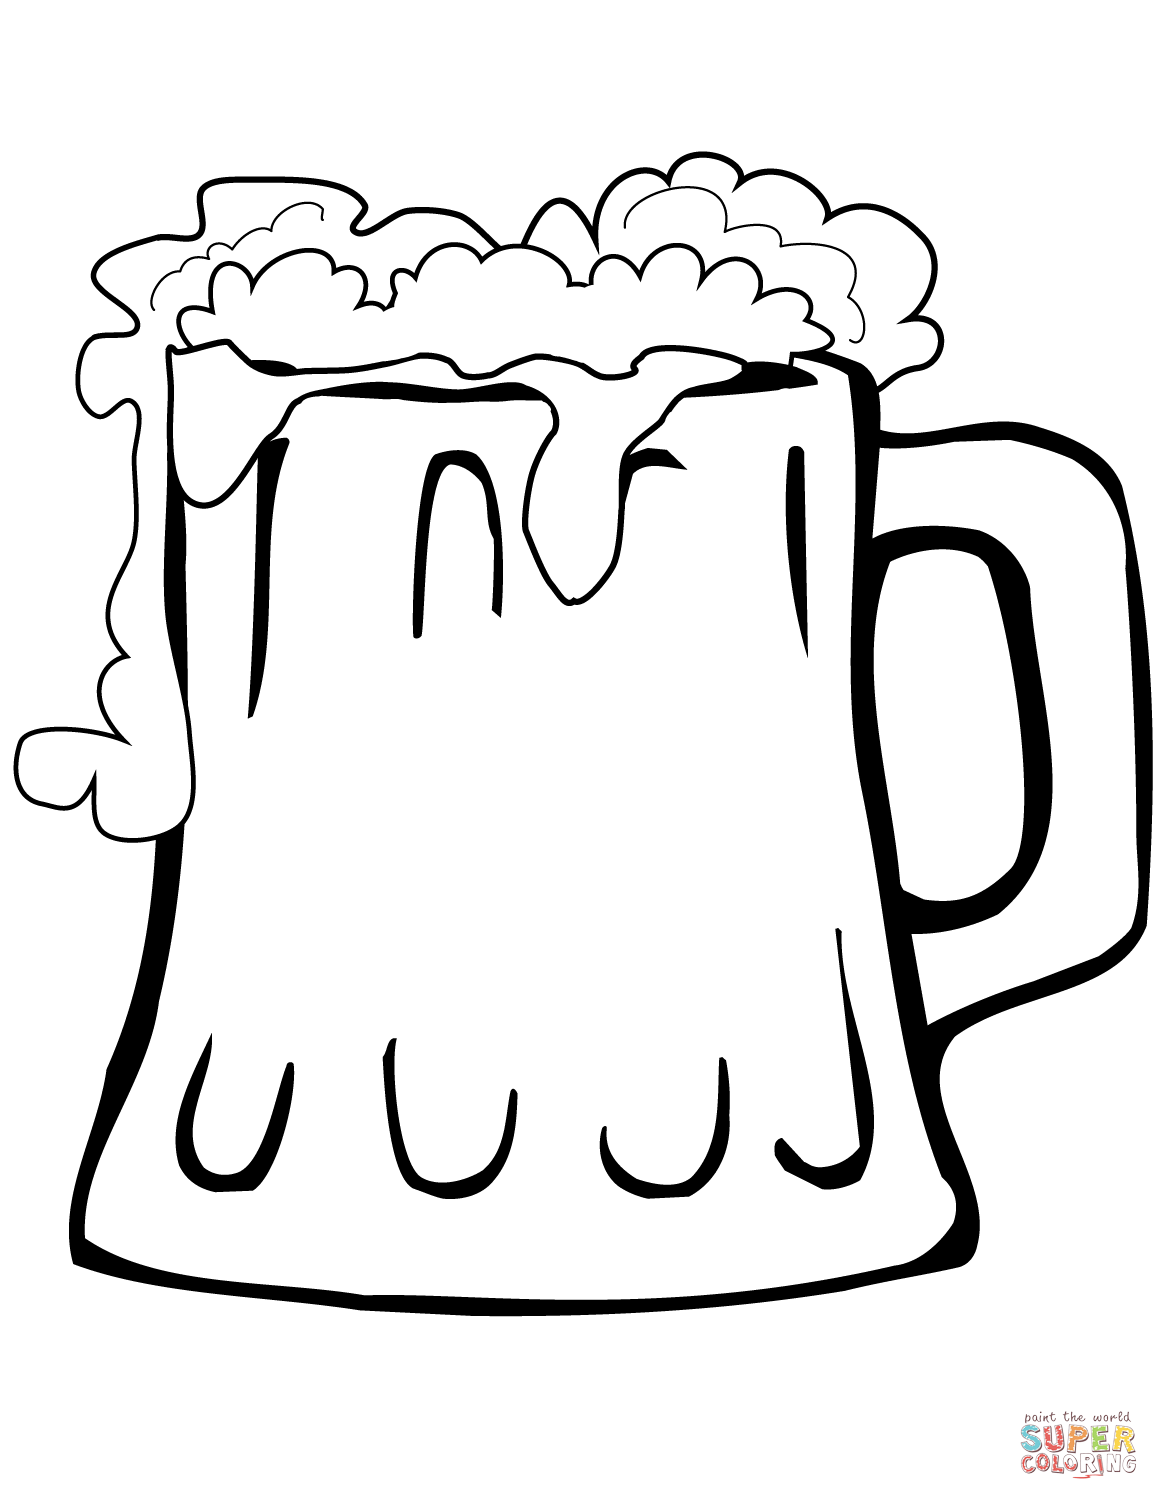 Beer Mug coloring page | Free Printable Coloring Pages